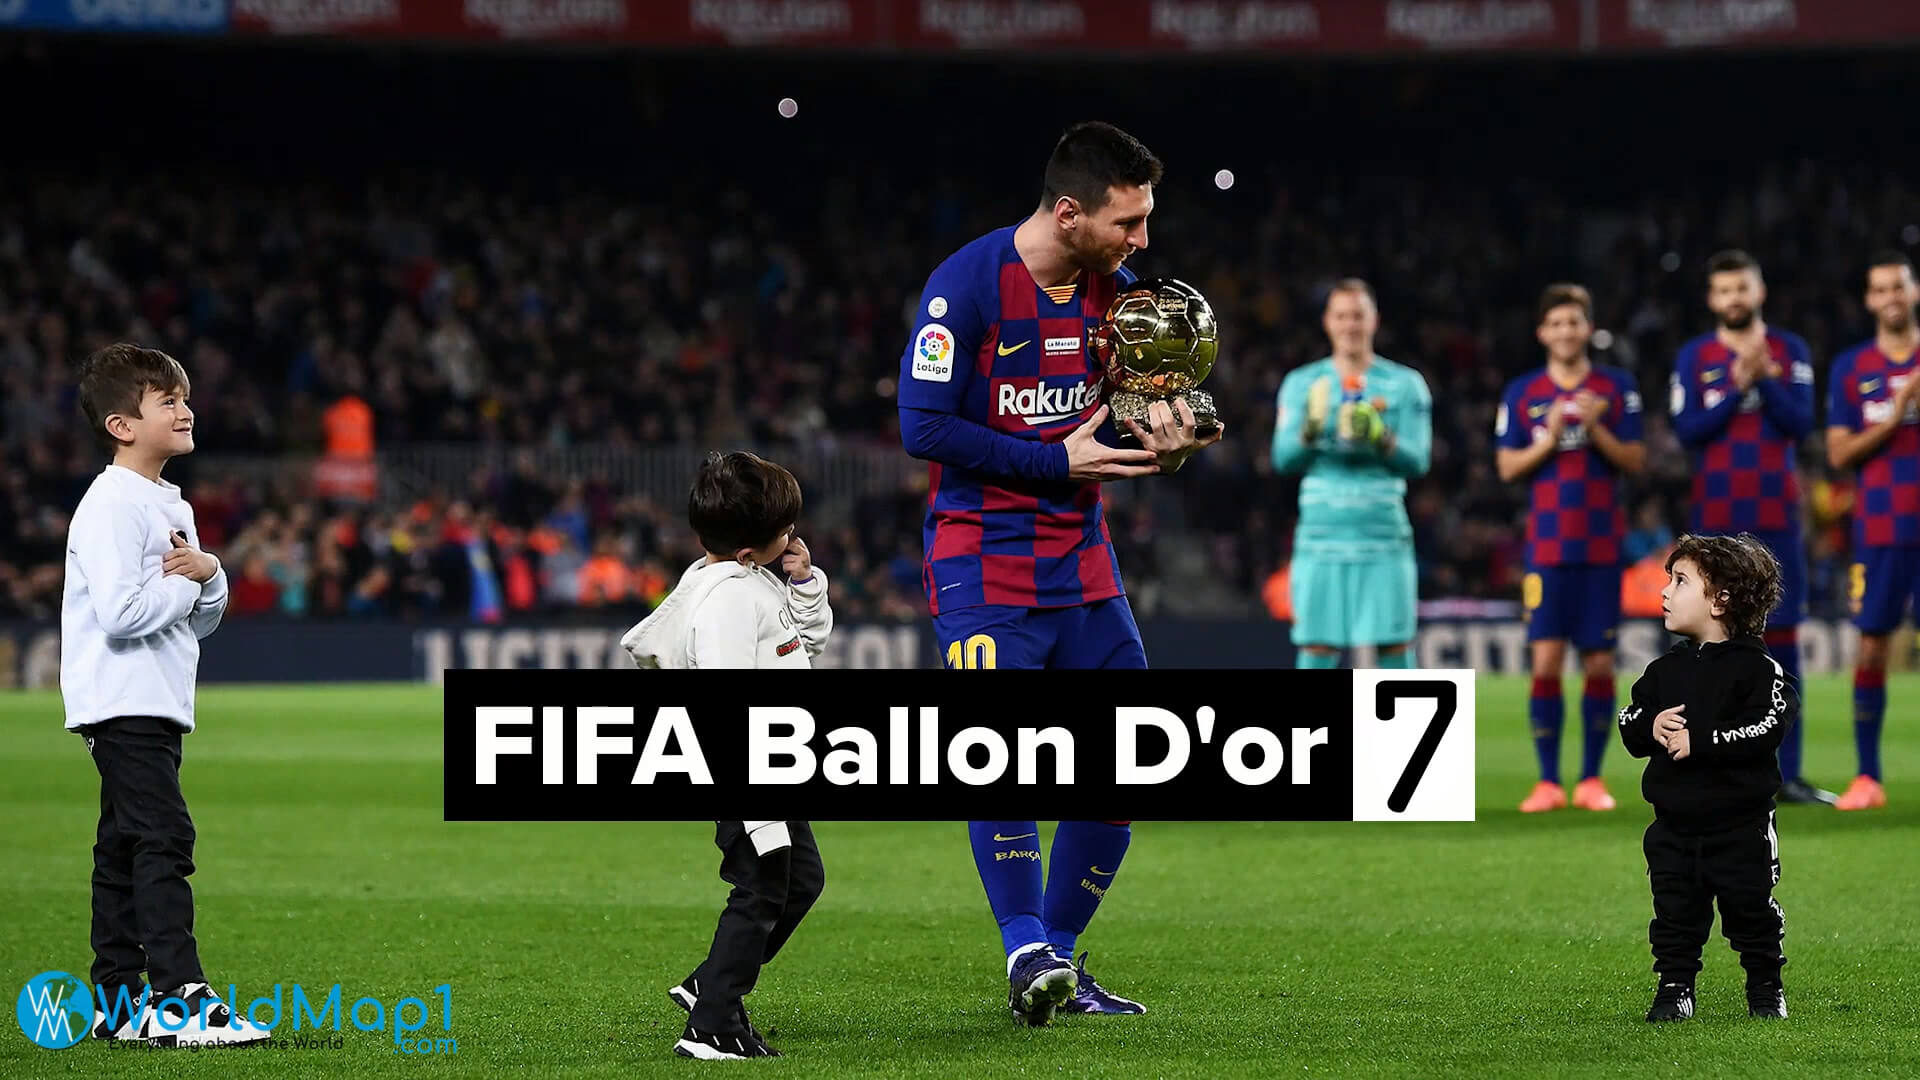 Lionel Messi gewinnt 7 Mal den FIFA Ballon d'or